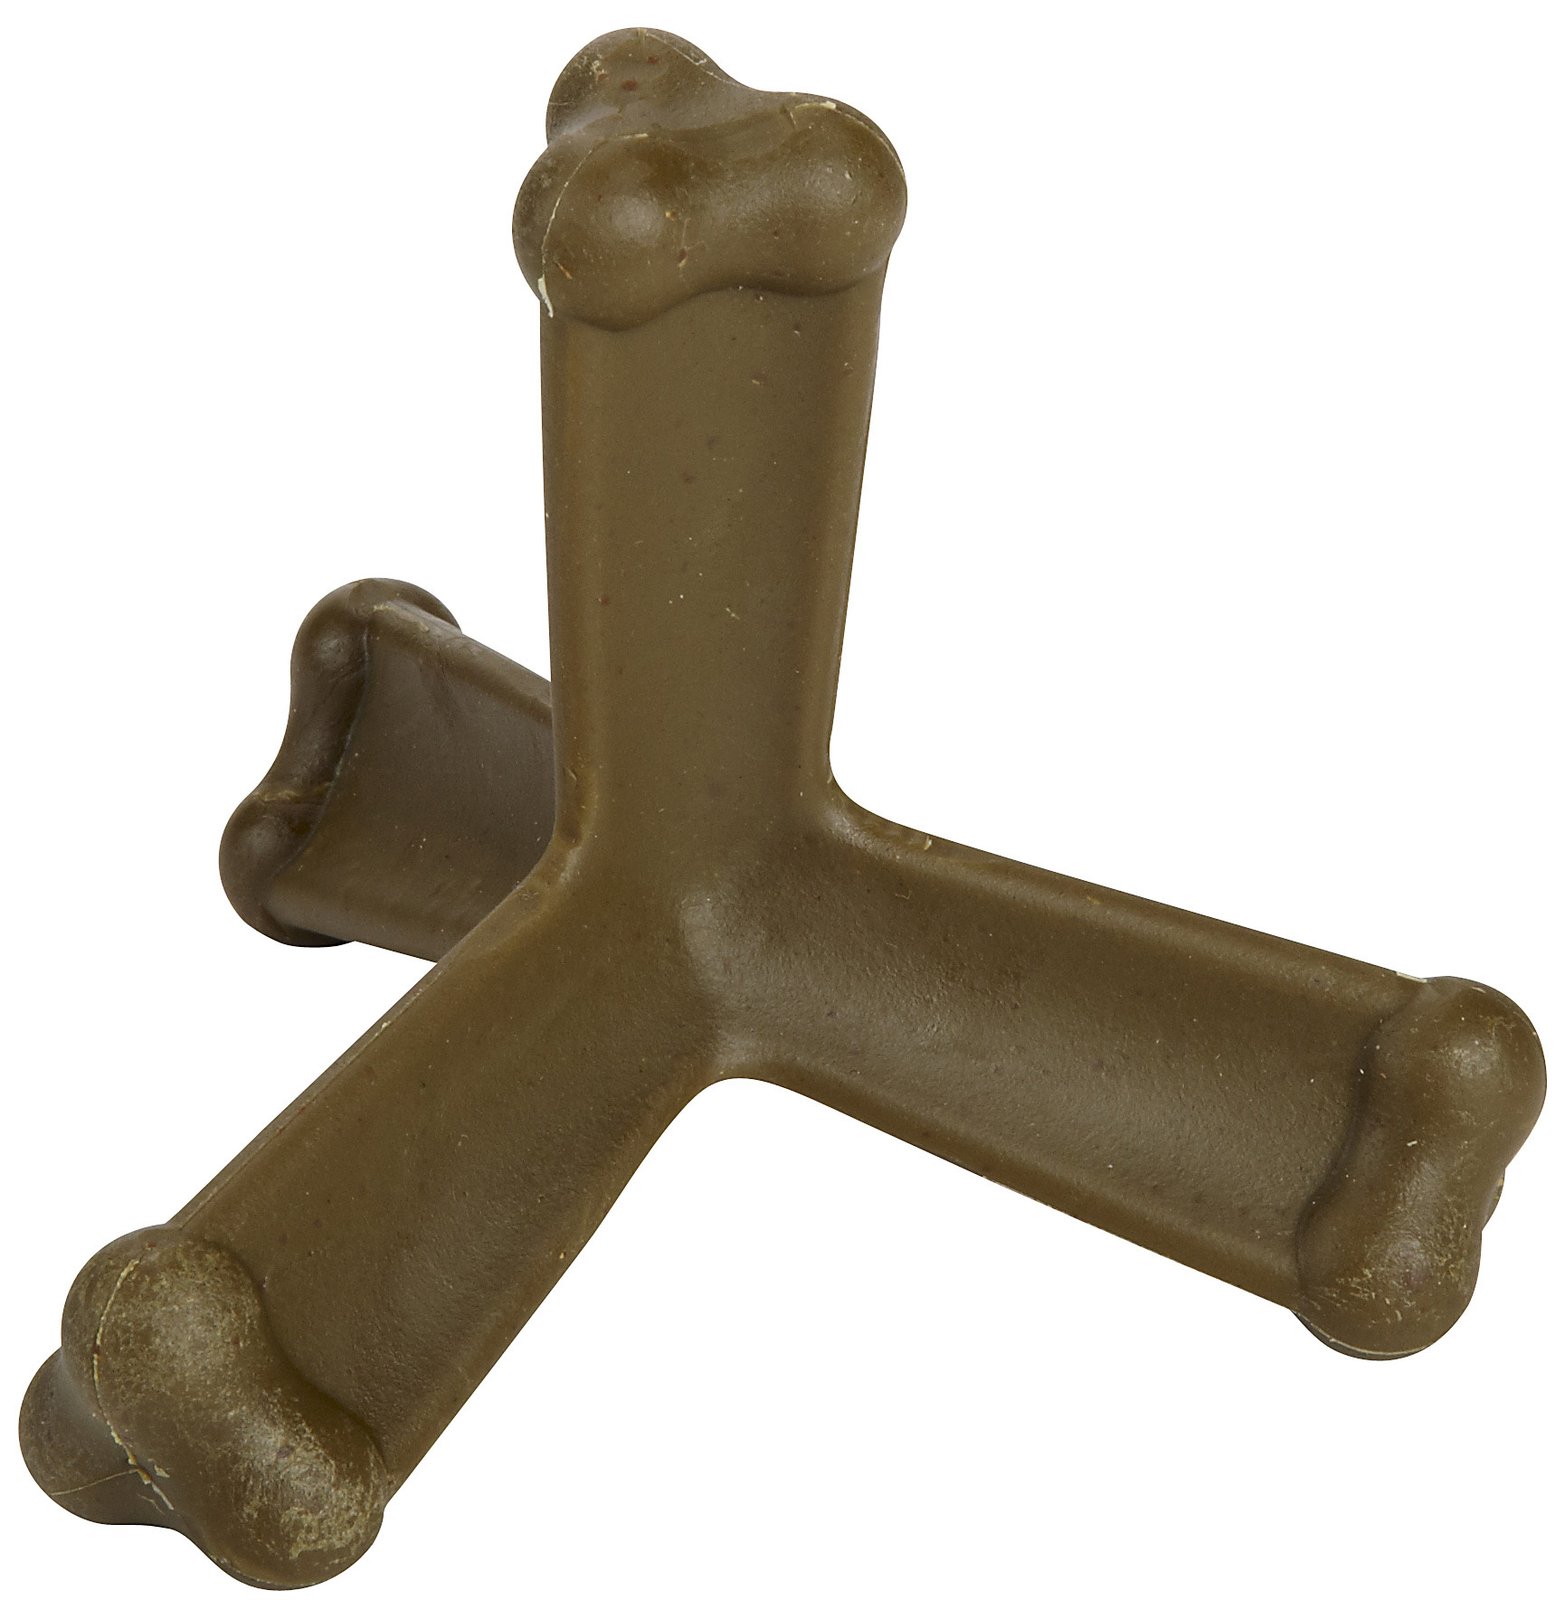 N-Bone Quado Dog Chew Treat - Mint - Free Shipping